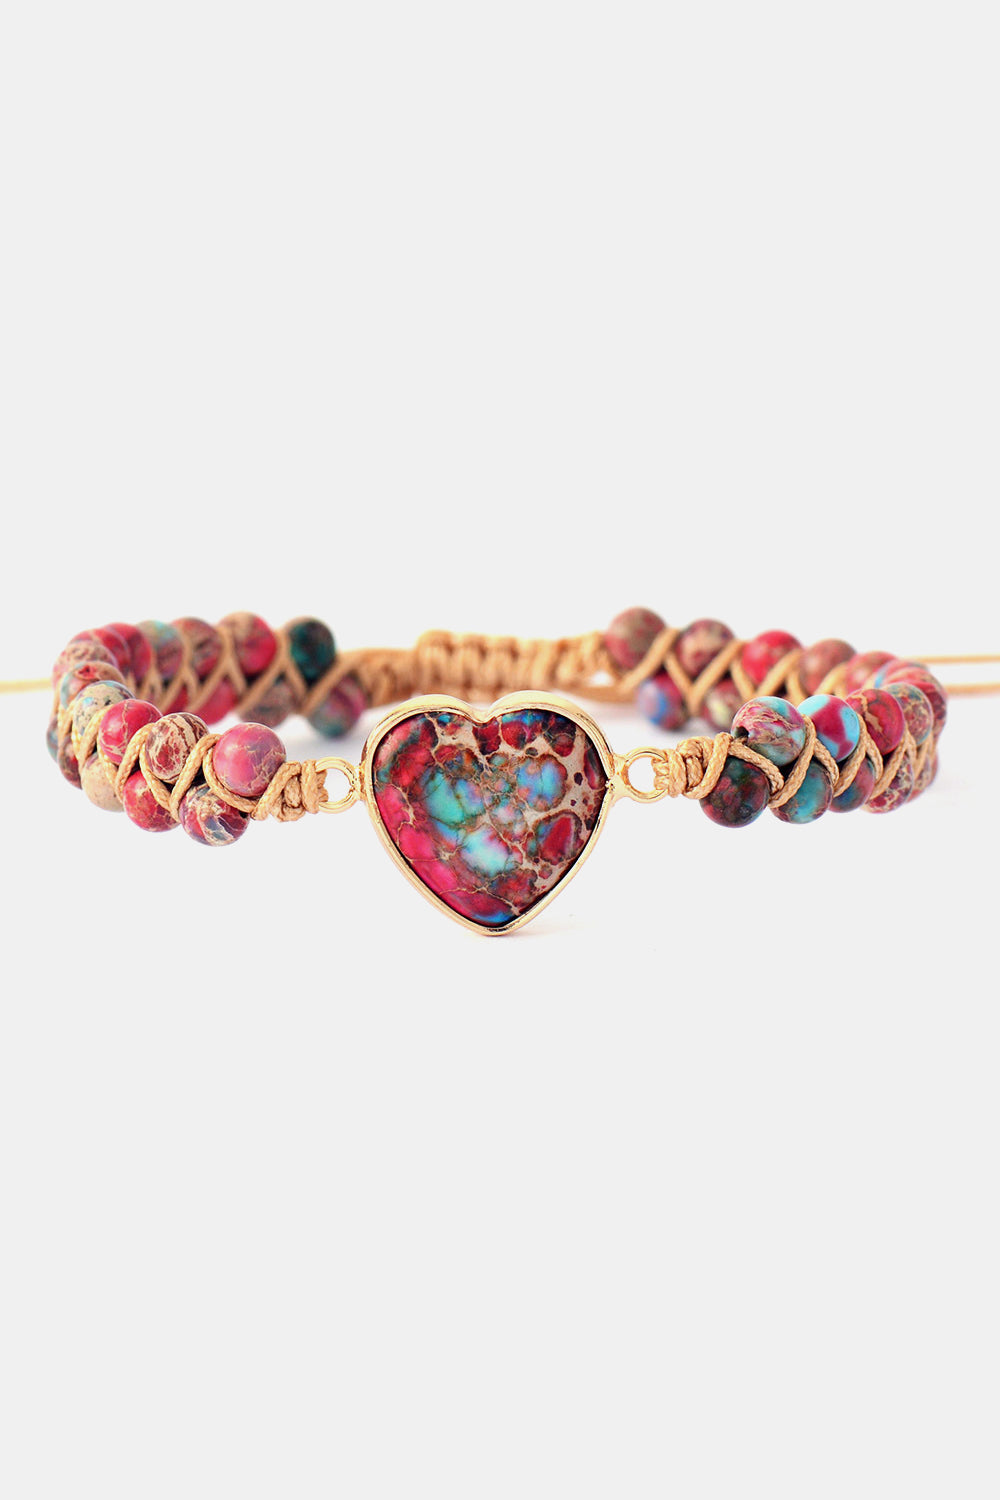 Handmade Heart Shape Natural Stone Bracelet - Women’s Jewelry - Bracelets - 4 - 2024